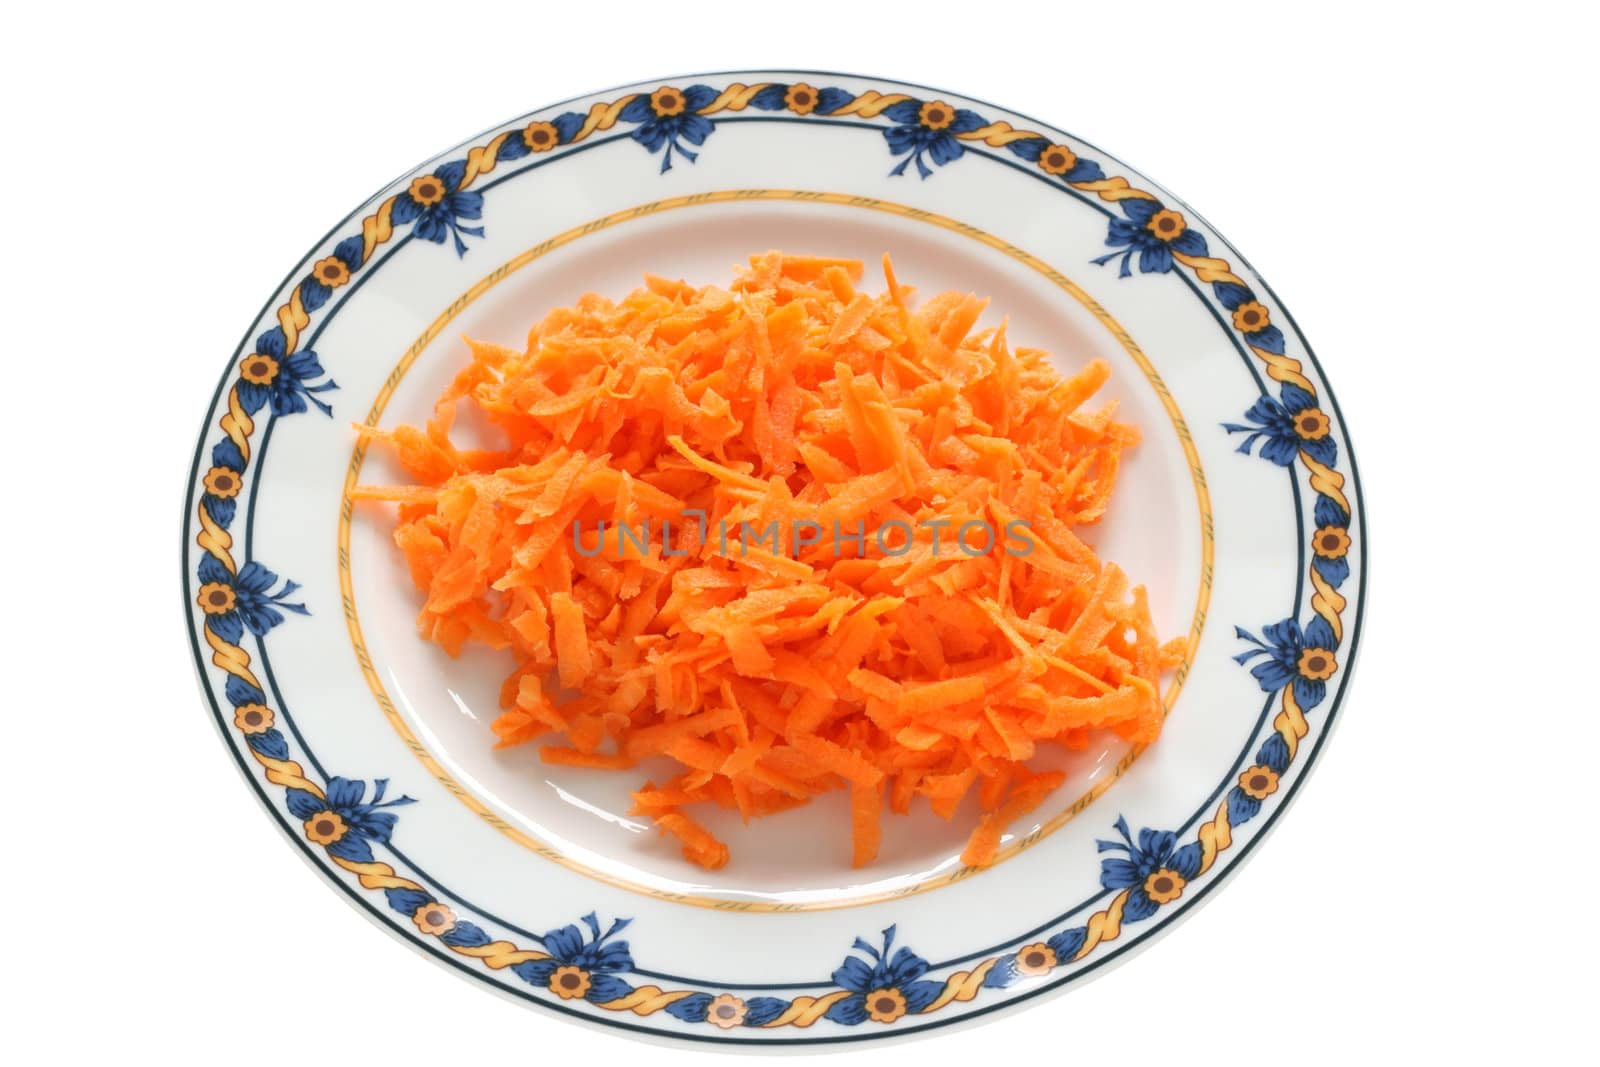 carrot salad on plate